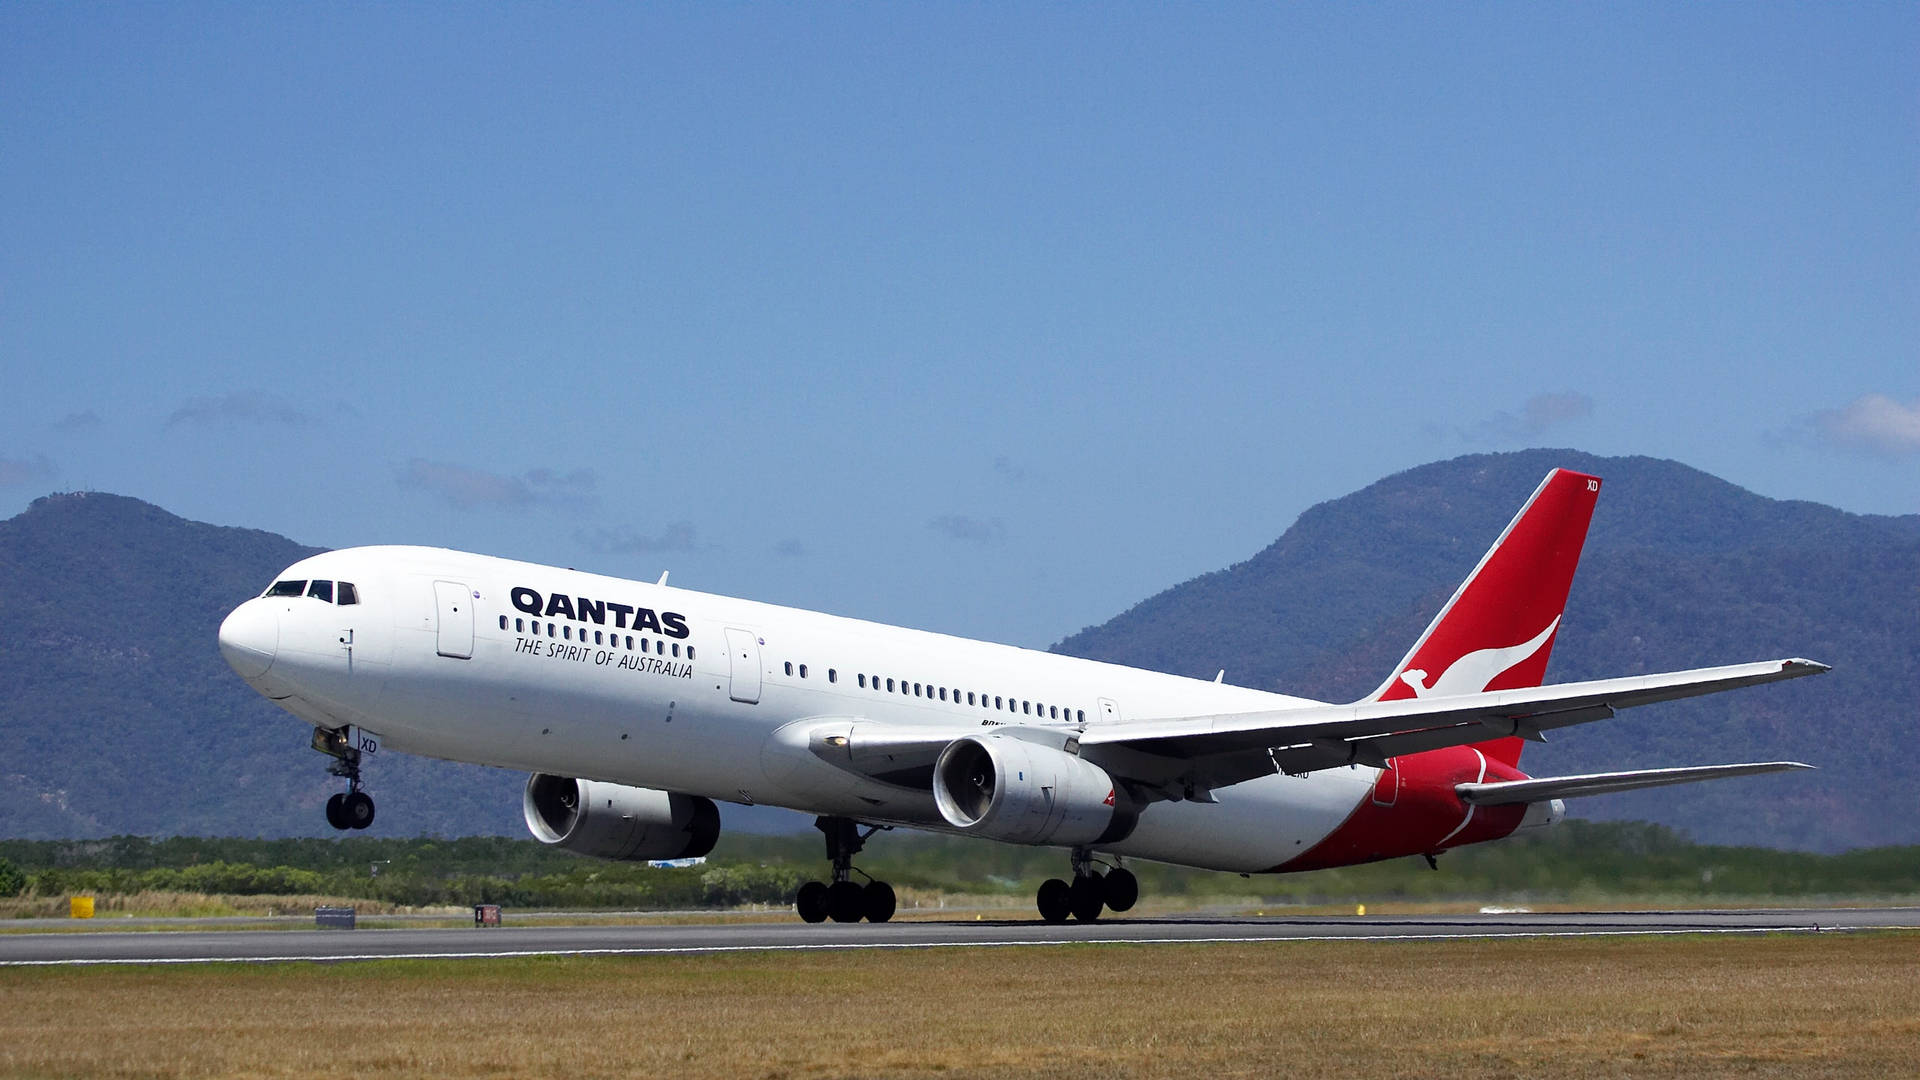 Qantaspassagierflugzeug Hebt Ab. Wallpaper